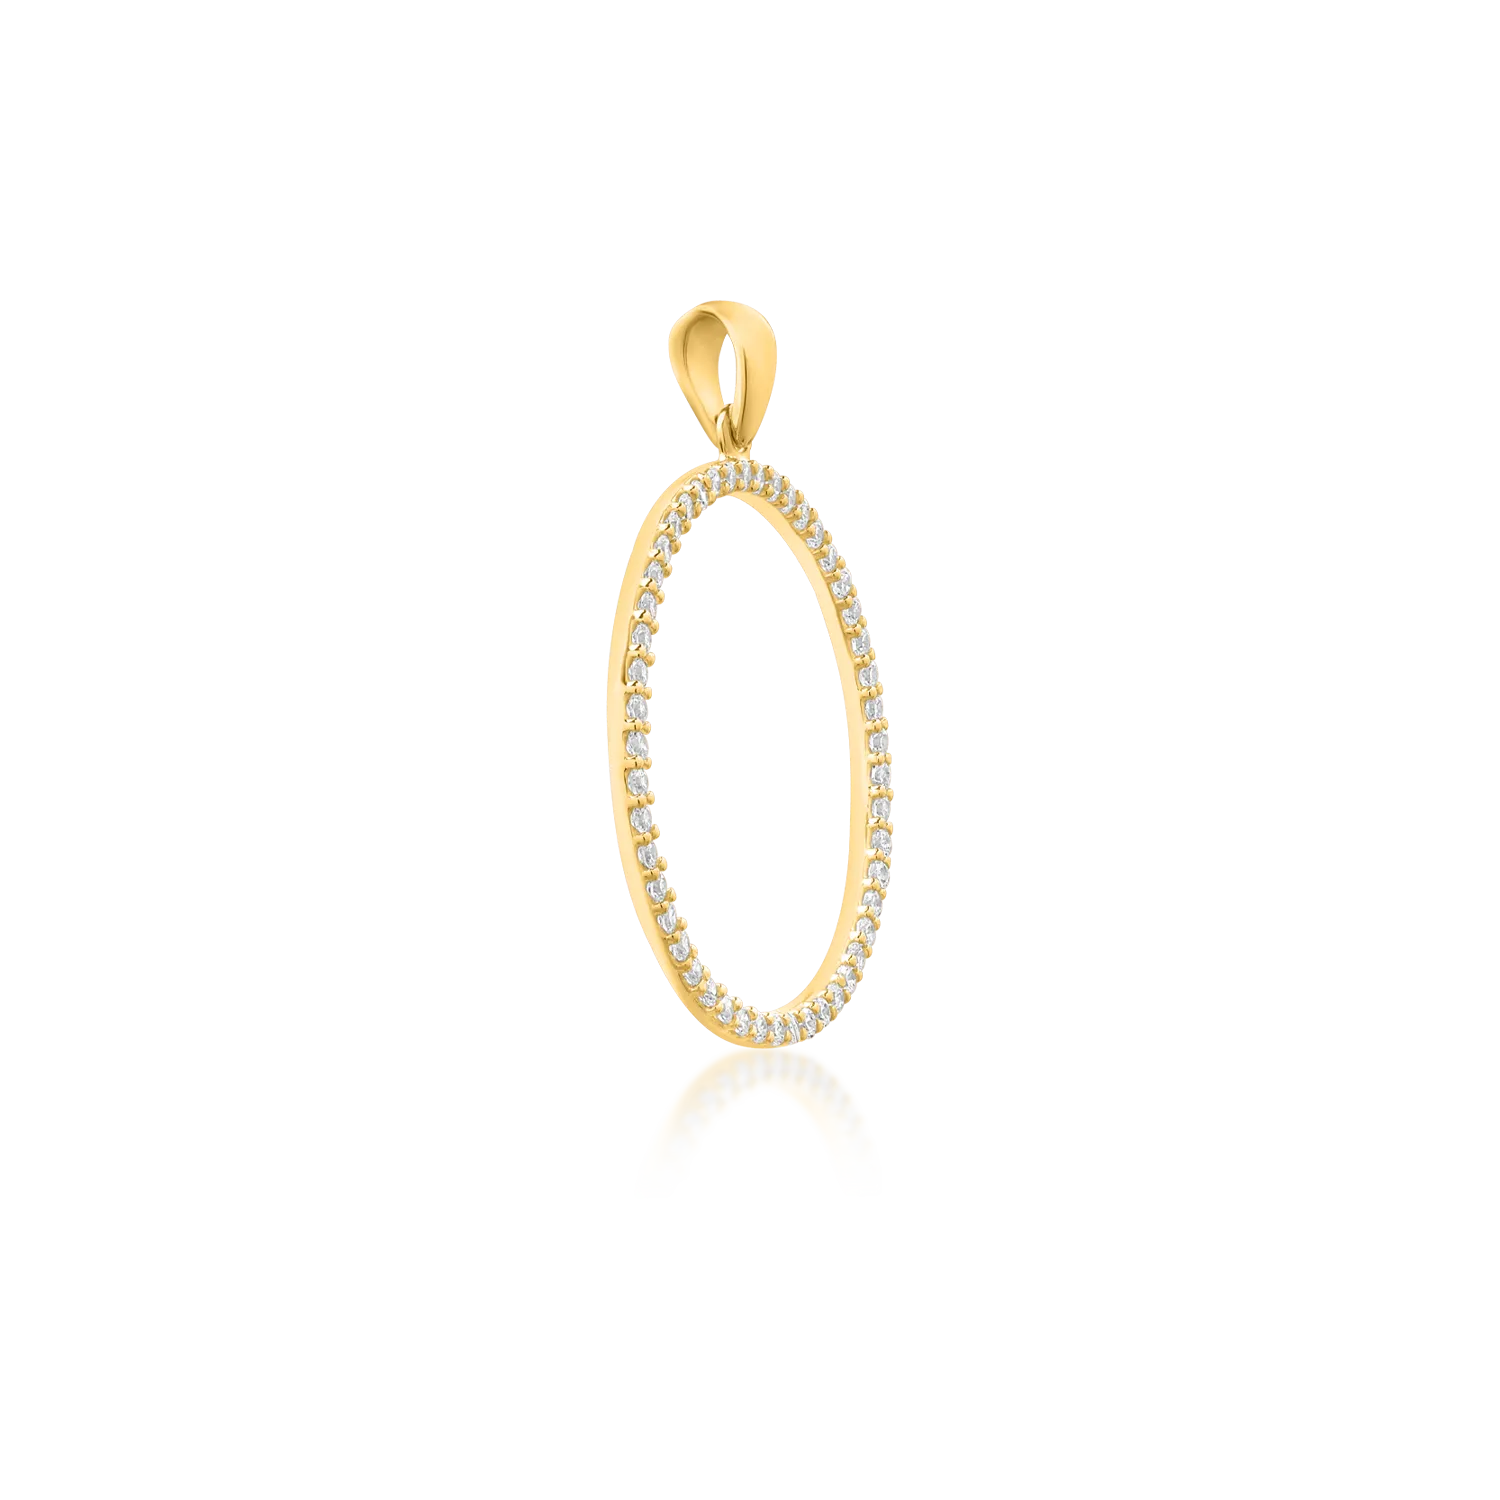 14K yellow gold pendant